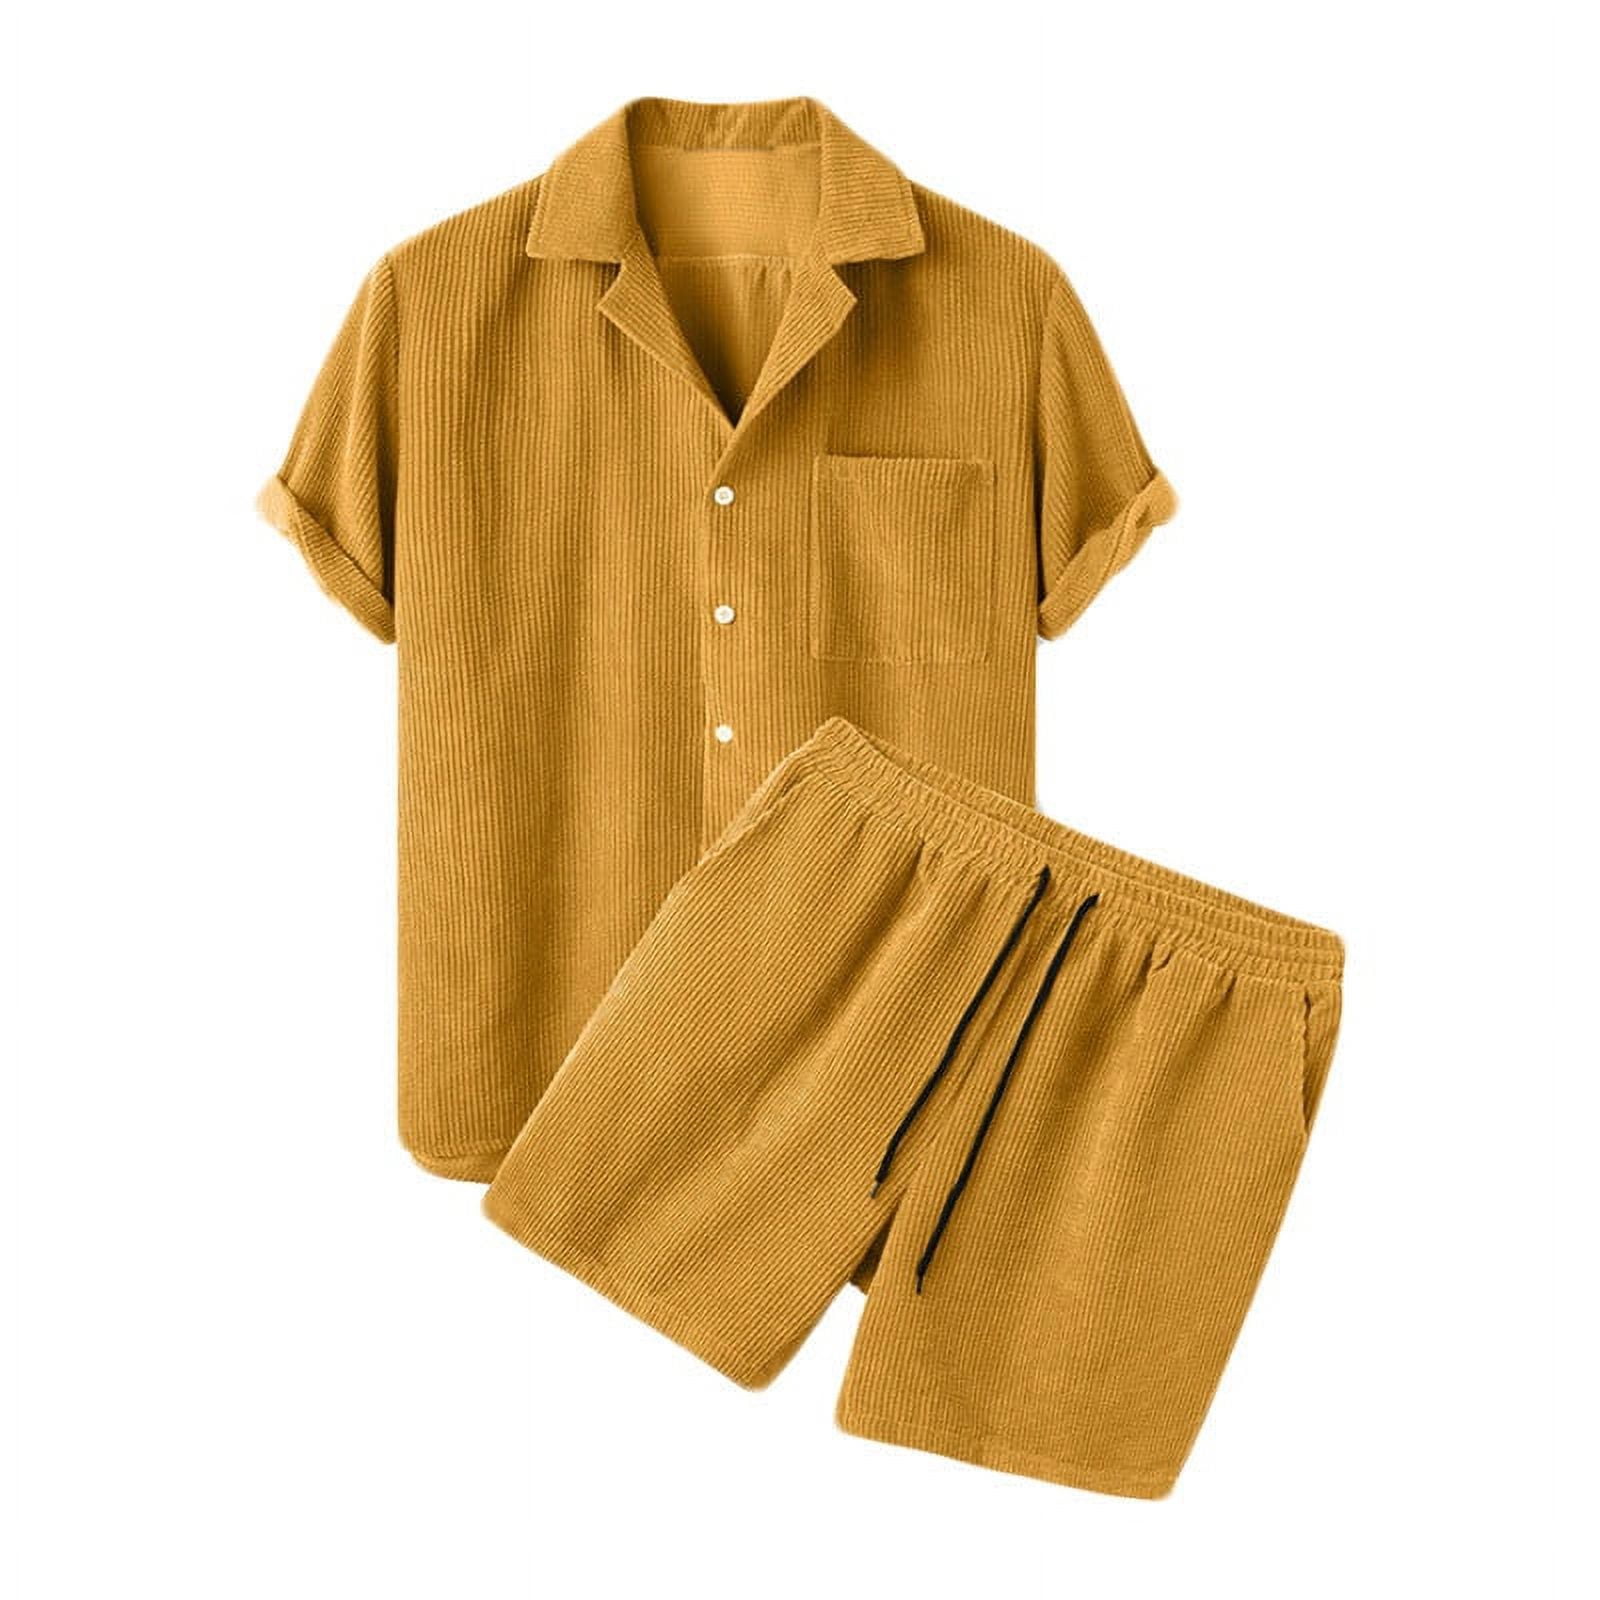 Honeeladyy Men's Casual Button-Down Shirts Short Sleeve Striped Dress ...